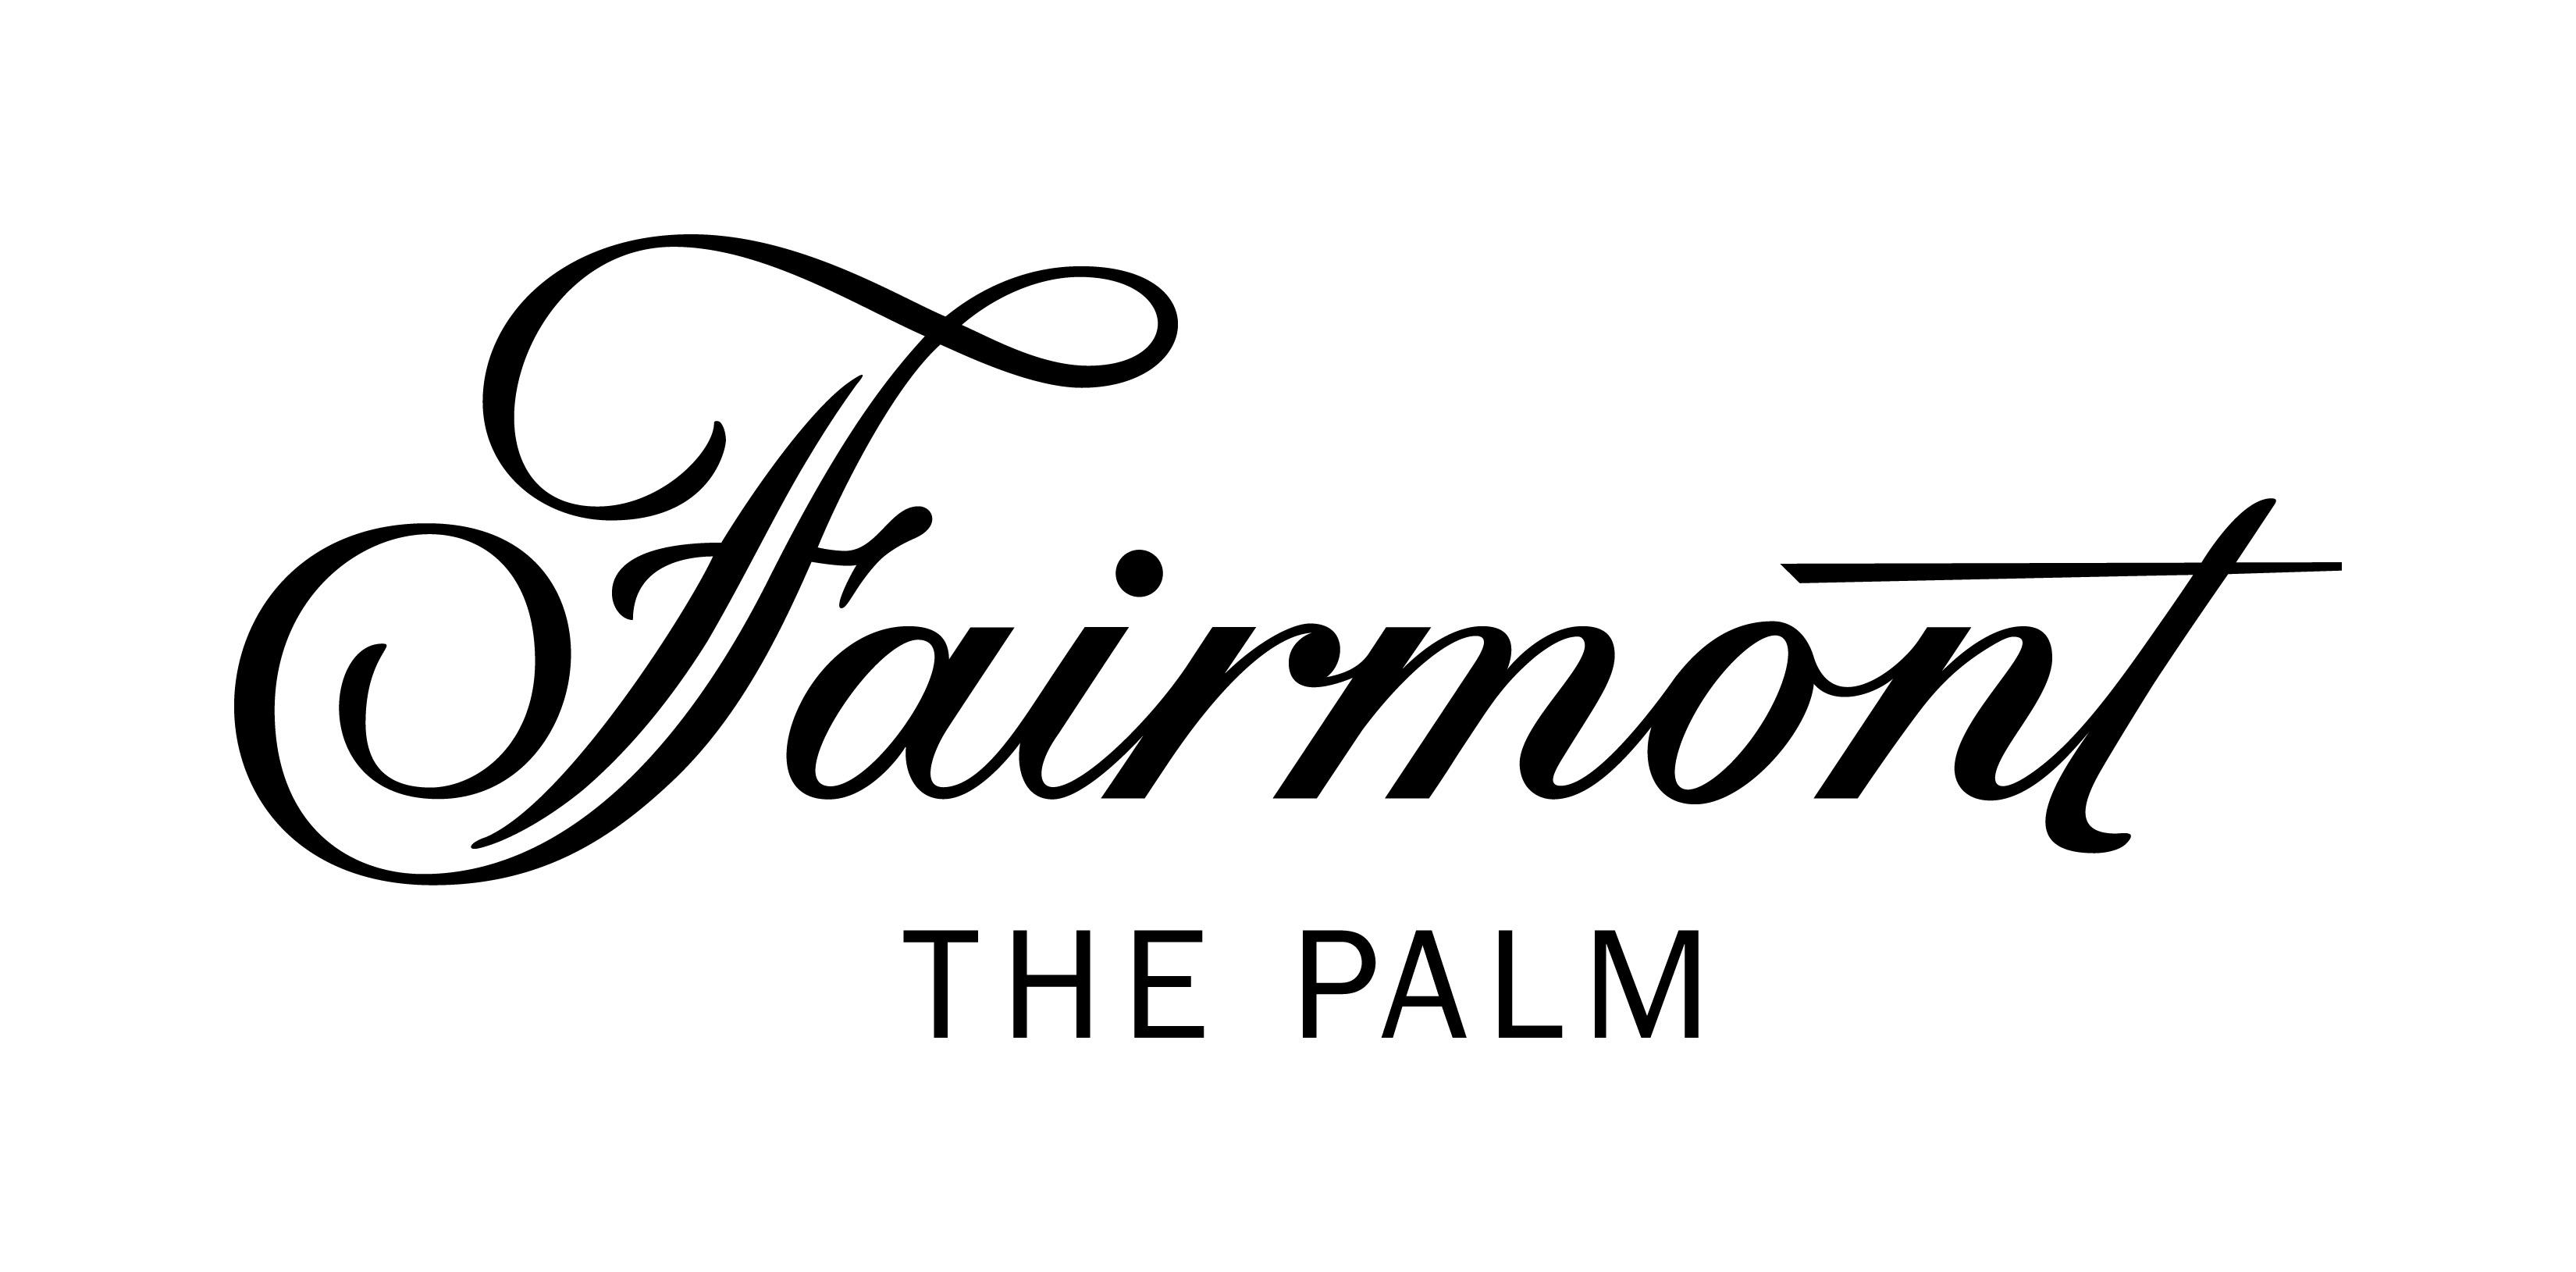 Fairmont Logo - Fairmont The Palm logo in black 2015 - Inside The Closet